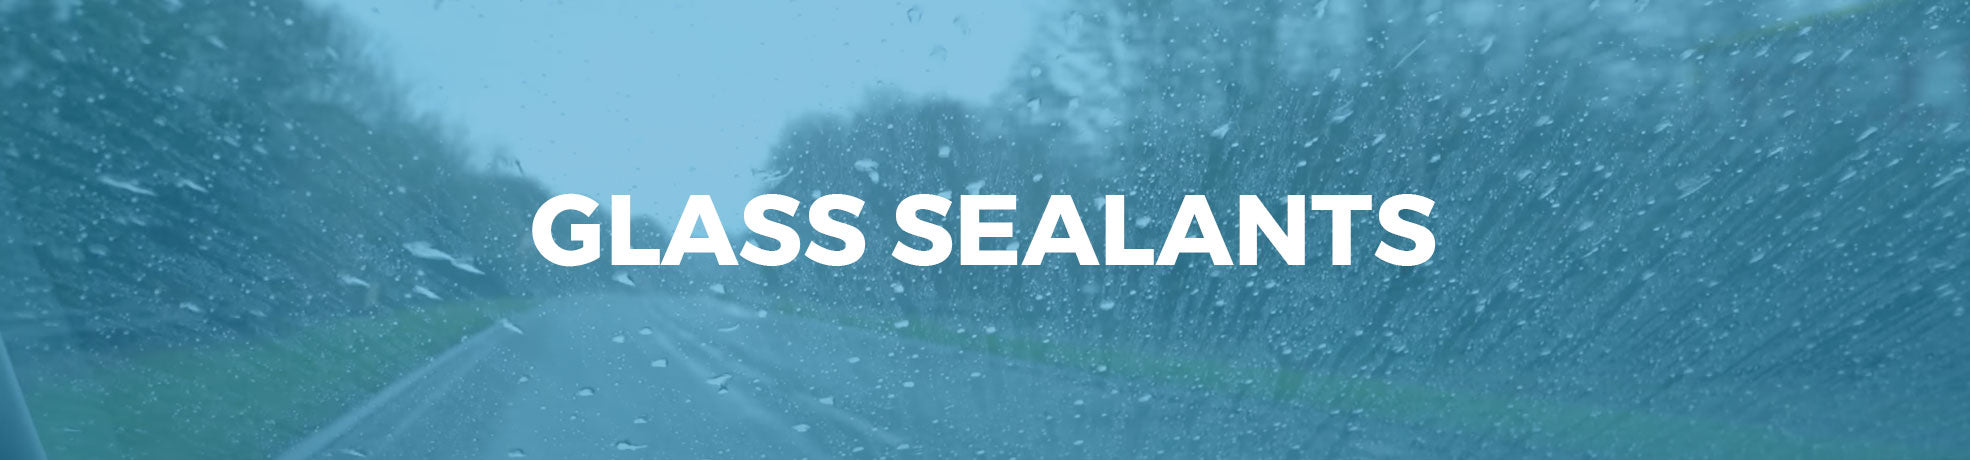 Glass Sealants